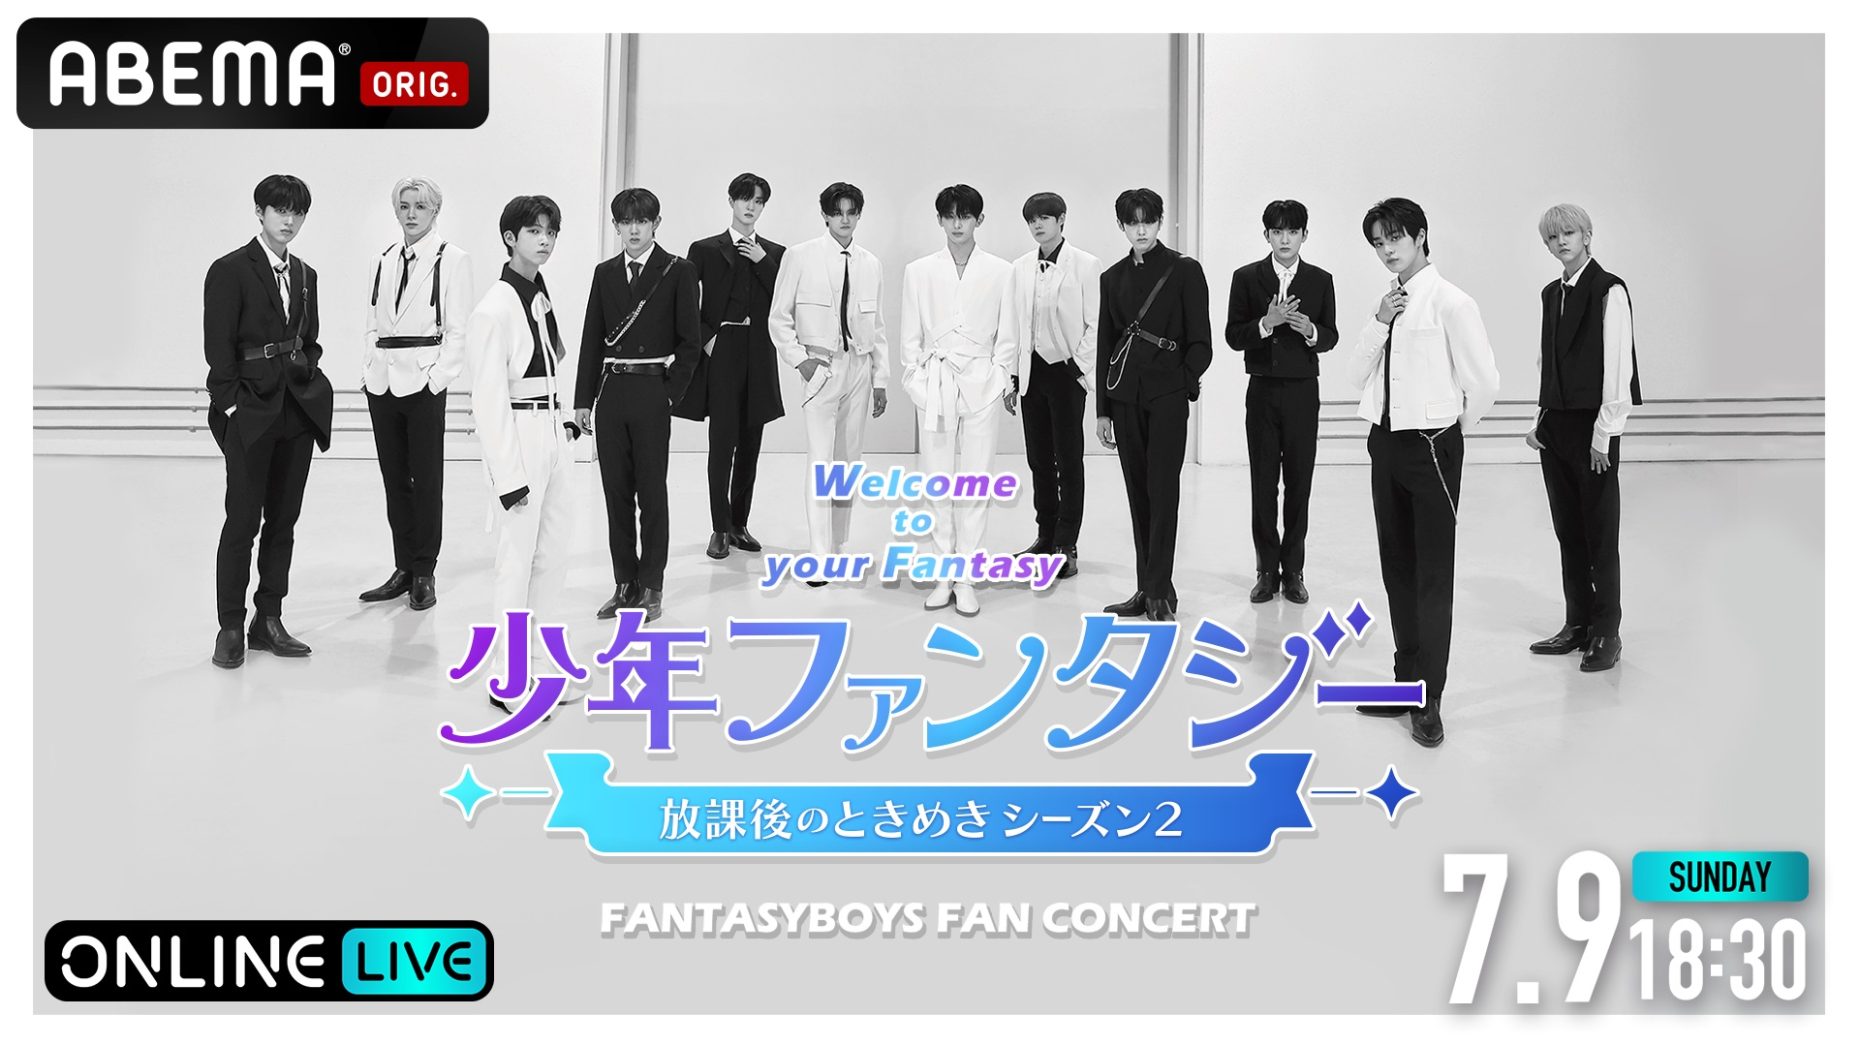 FANTASY BOYS 7月9日の日本初ファンコンサートをABEMAが独占生配信